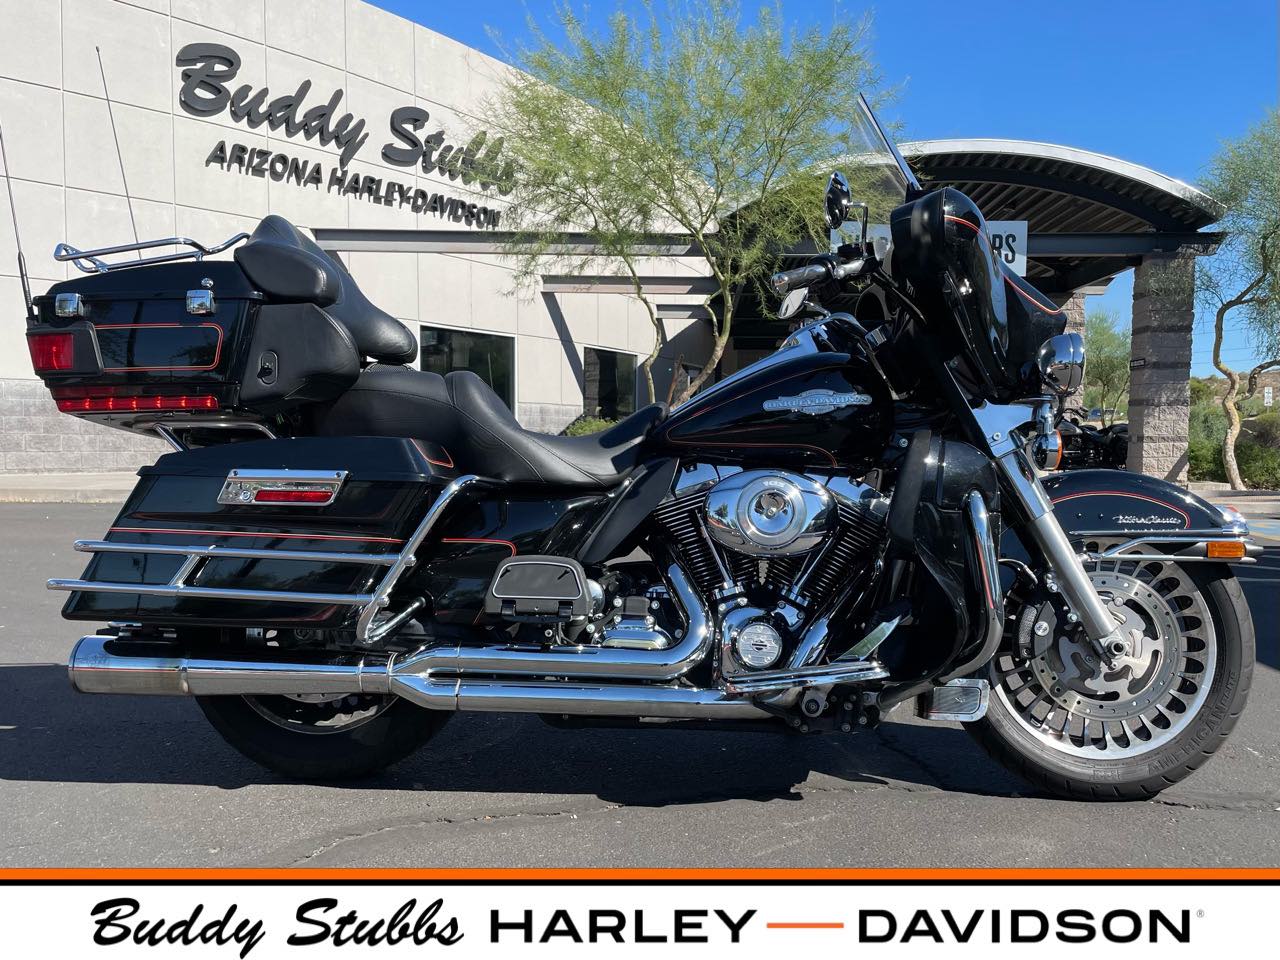 2012 Harley-Davidson Electra Glide Ultra Classic at Buddy Stubbs Arizona Harley-Davidson